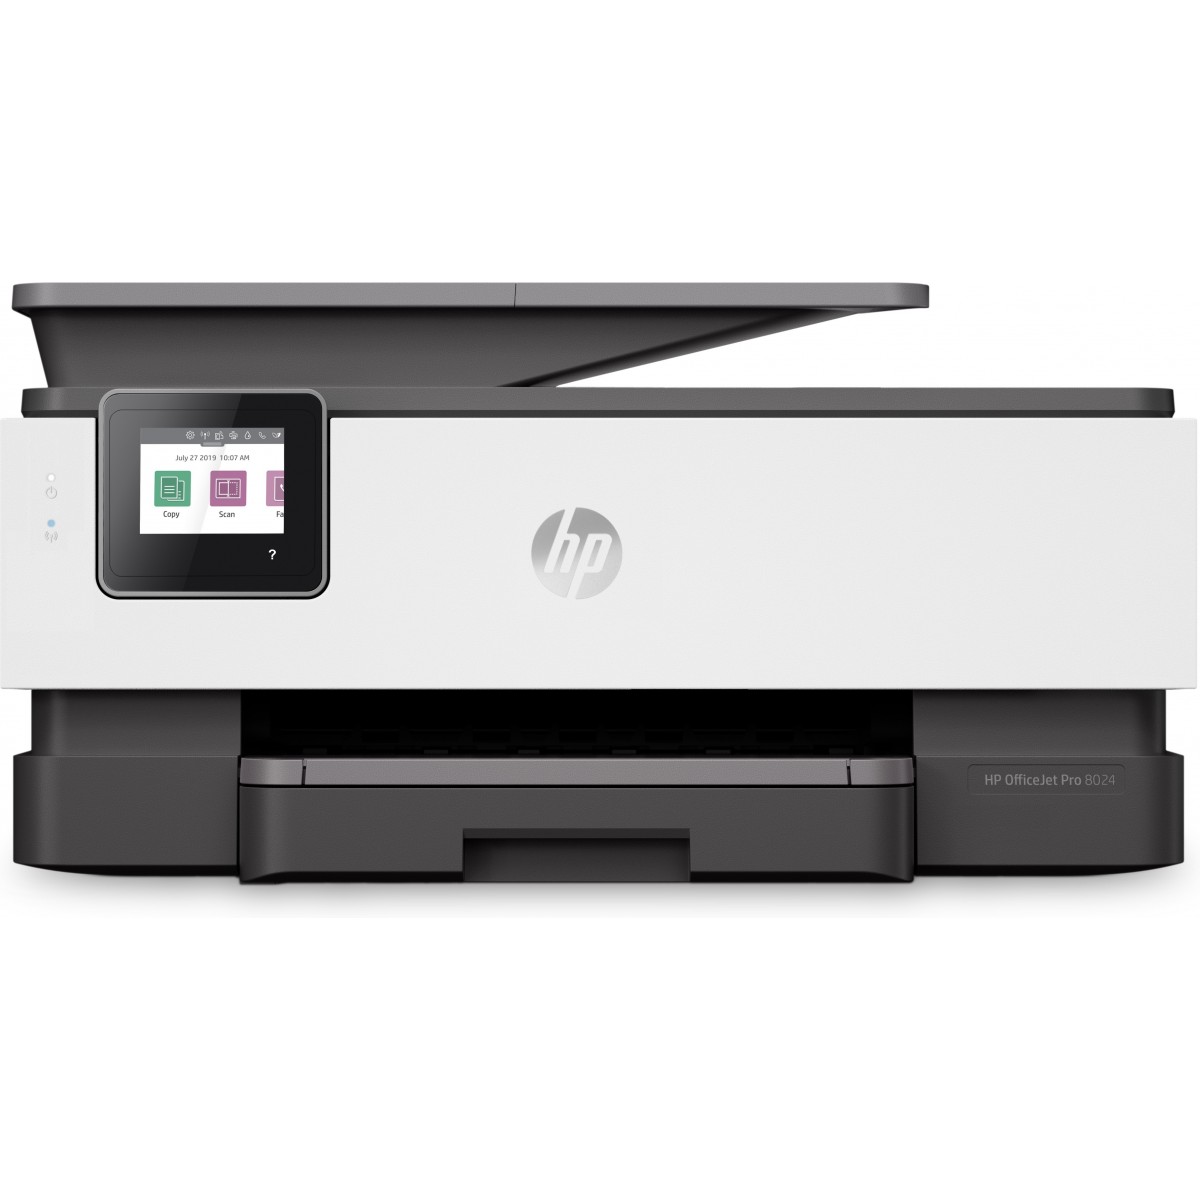 HP OfficeJet Pro 8024 - Thermal inkjet - Colour printing - 4800 x 1200 DPI - Colour copying - A4 - Black - White